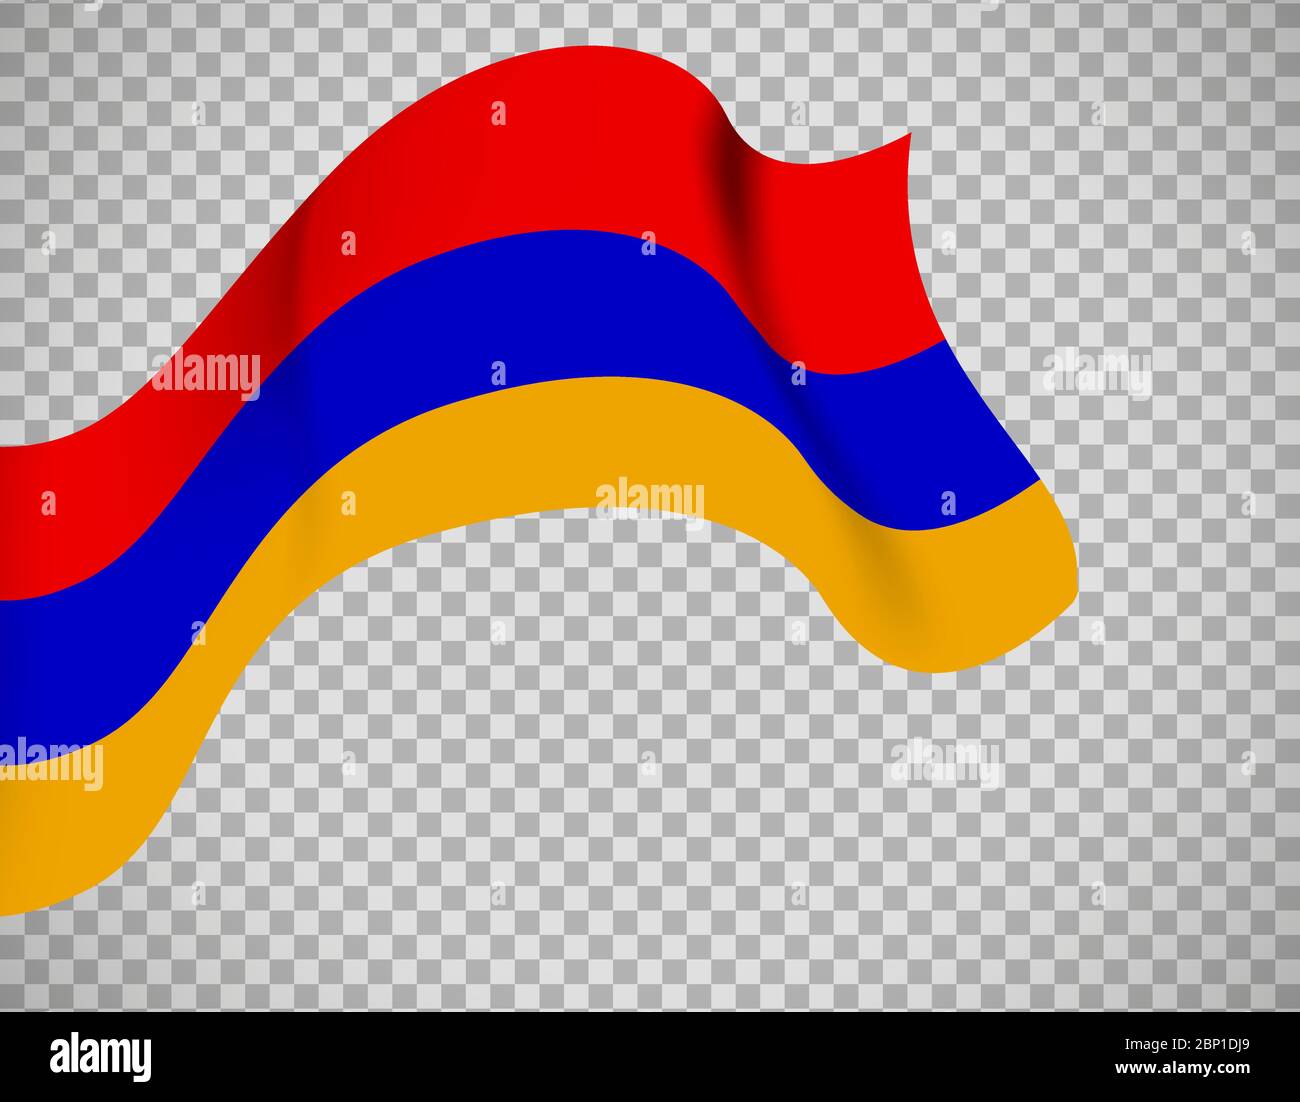 Armenia flag icon on transparent background. Vector illustration Stock Vector